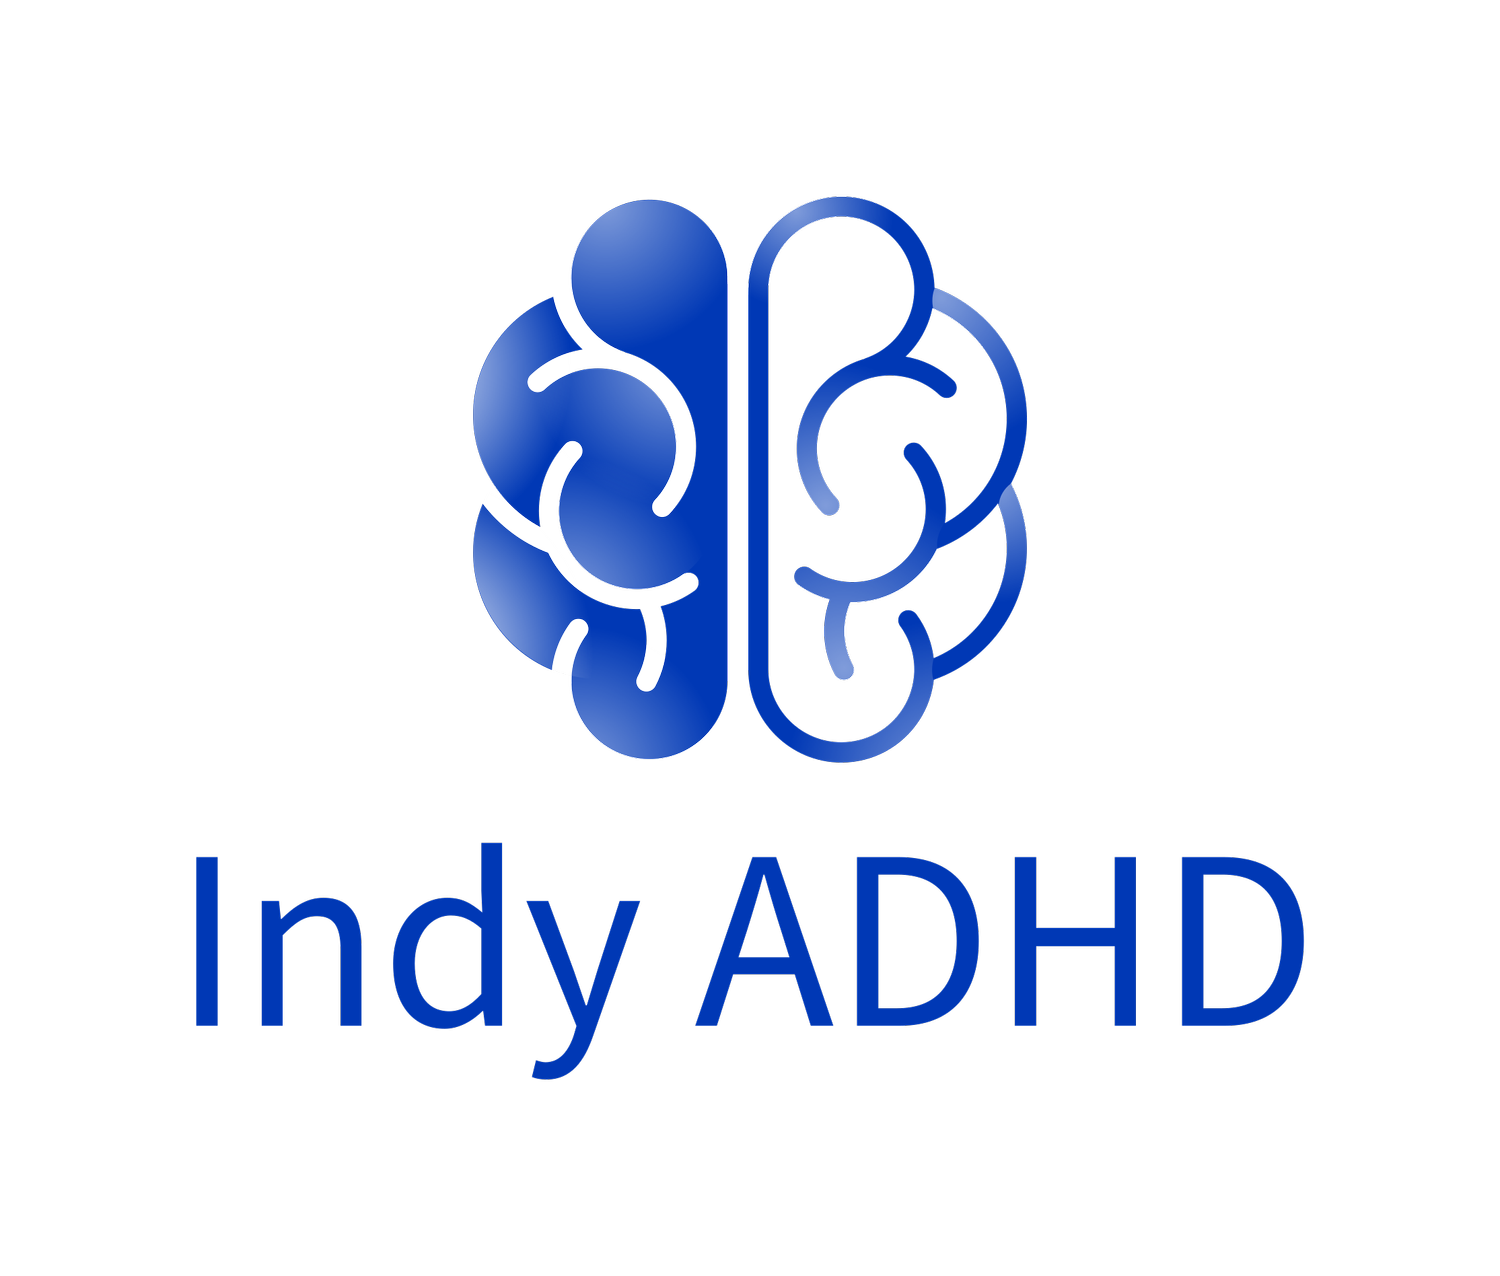 Indy ADHD